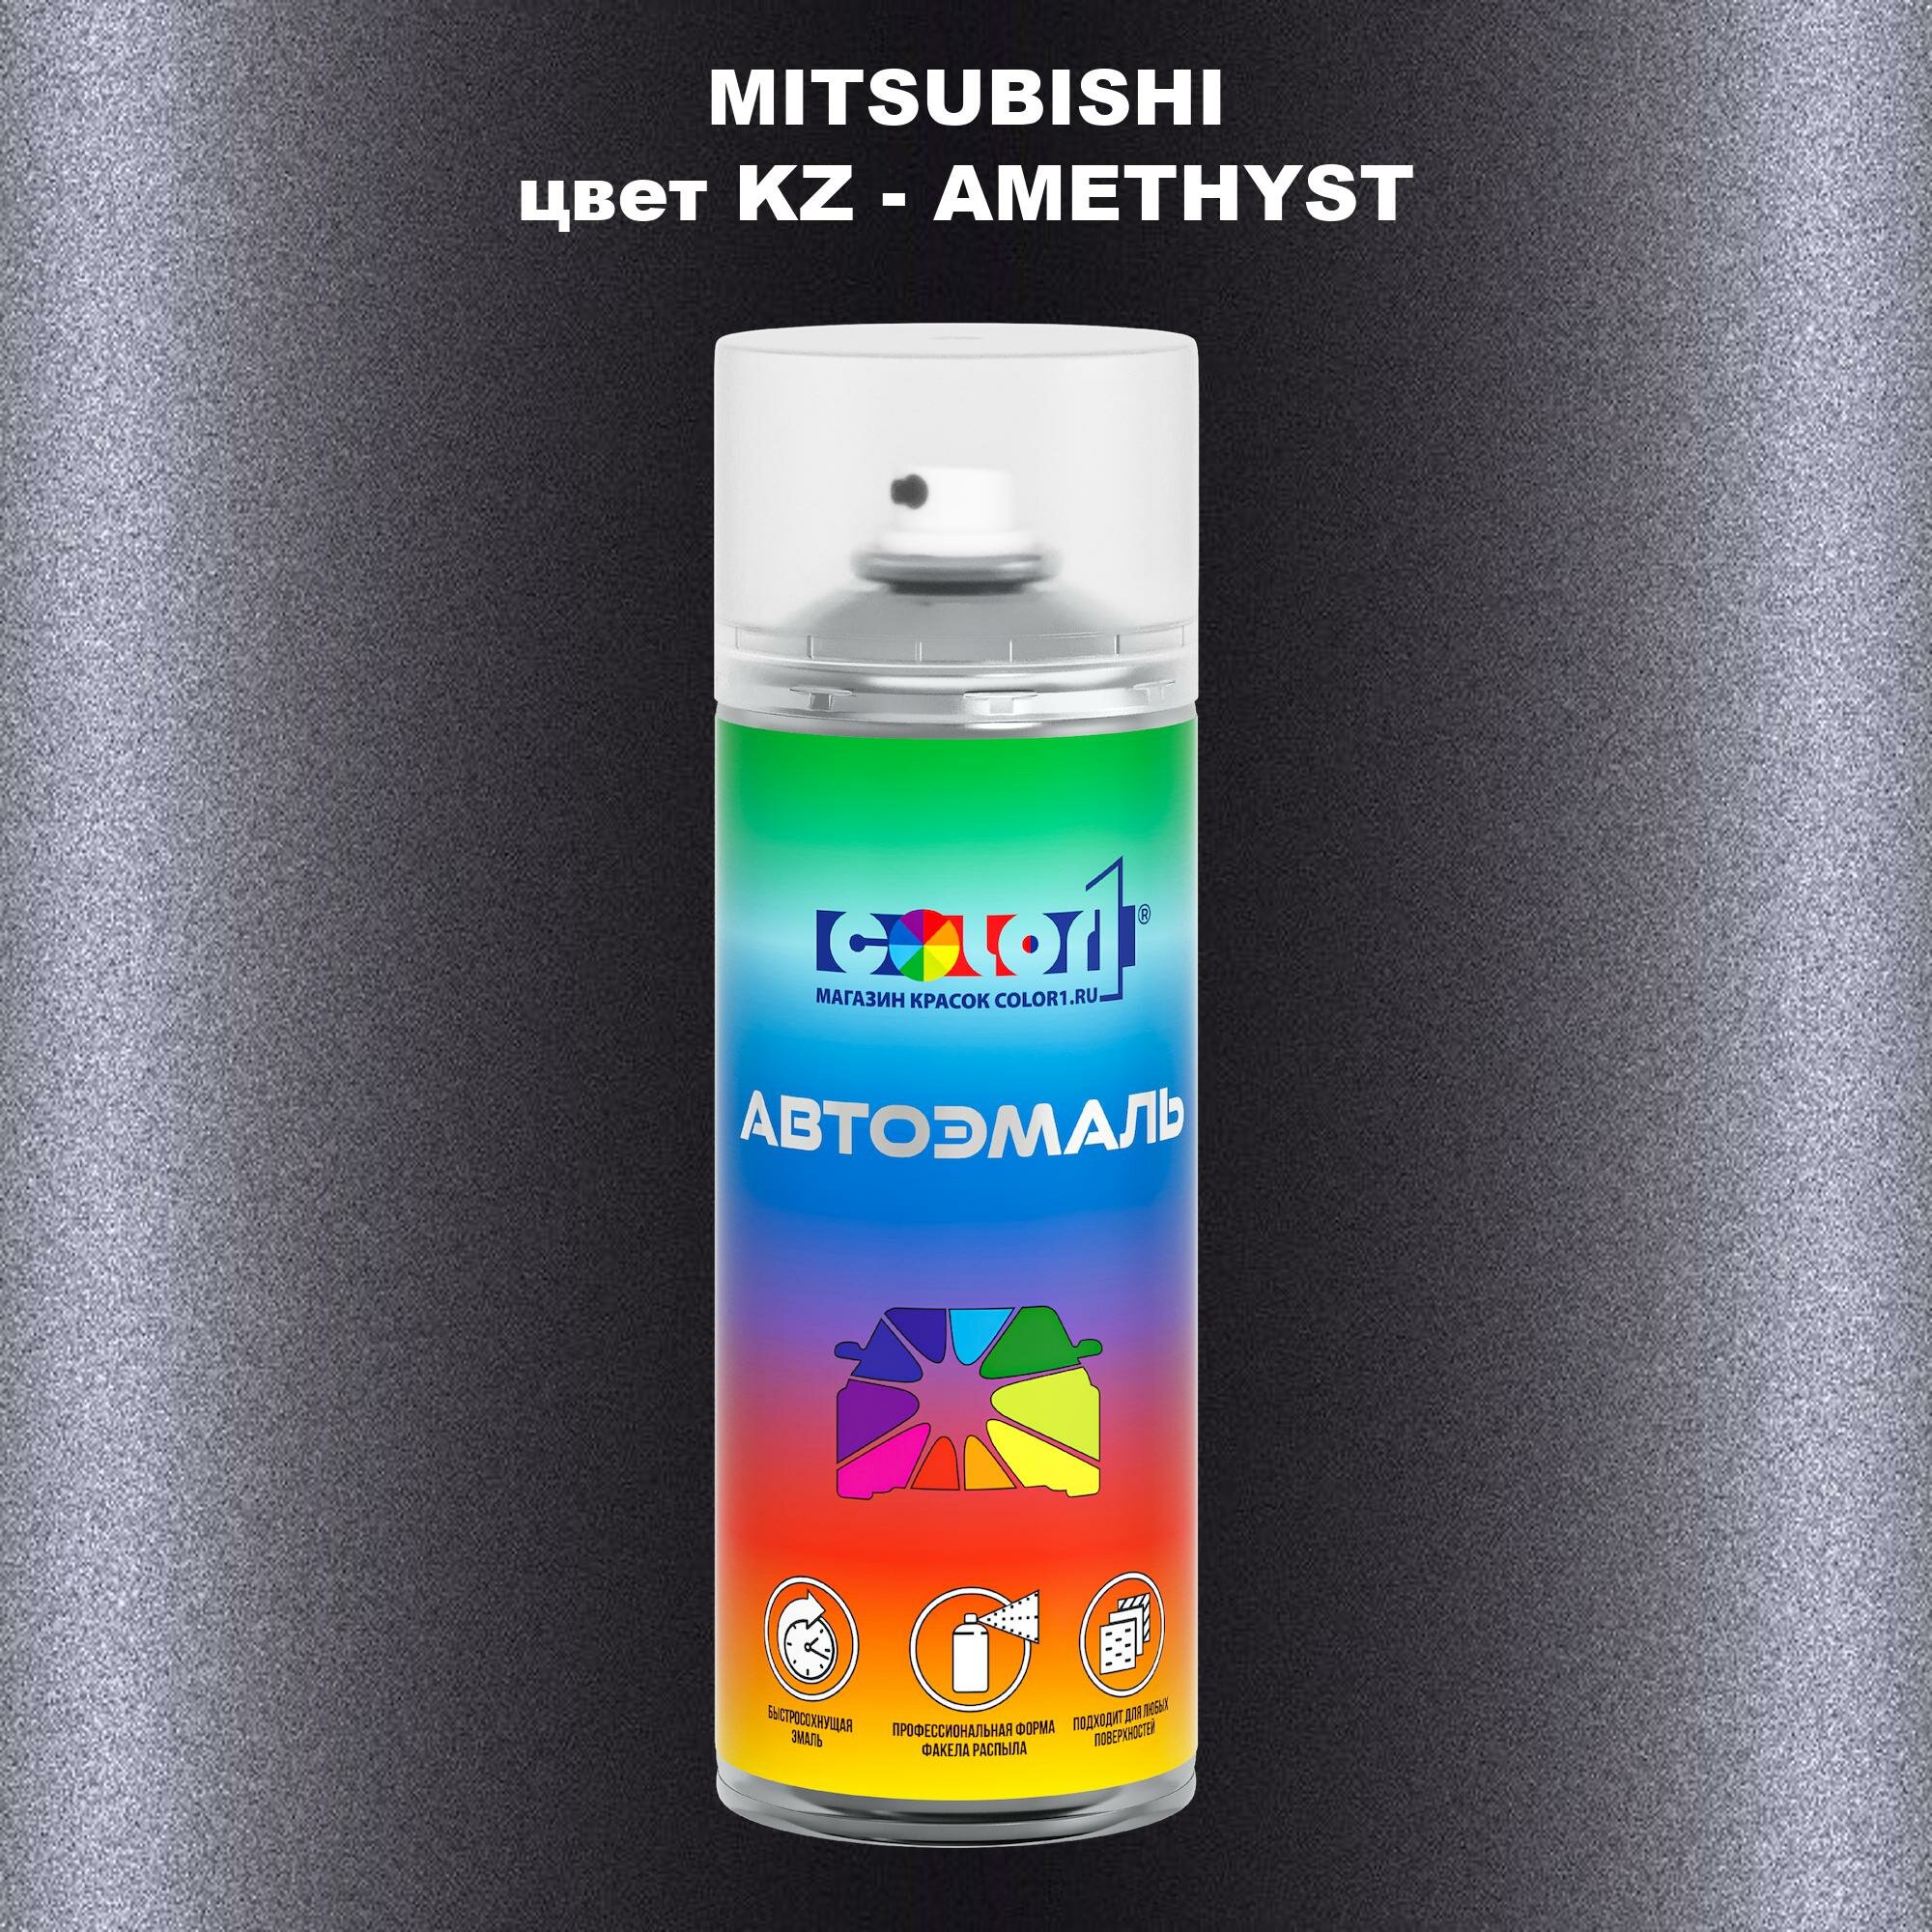 Аэрозольная краска COLOR1 для MITSUBISHI, цвет KZ - AMETHYST